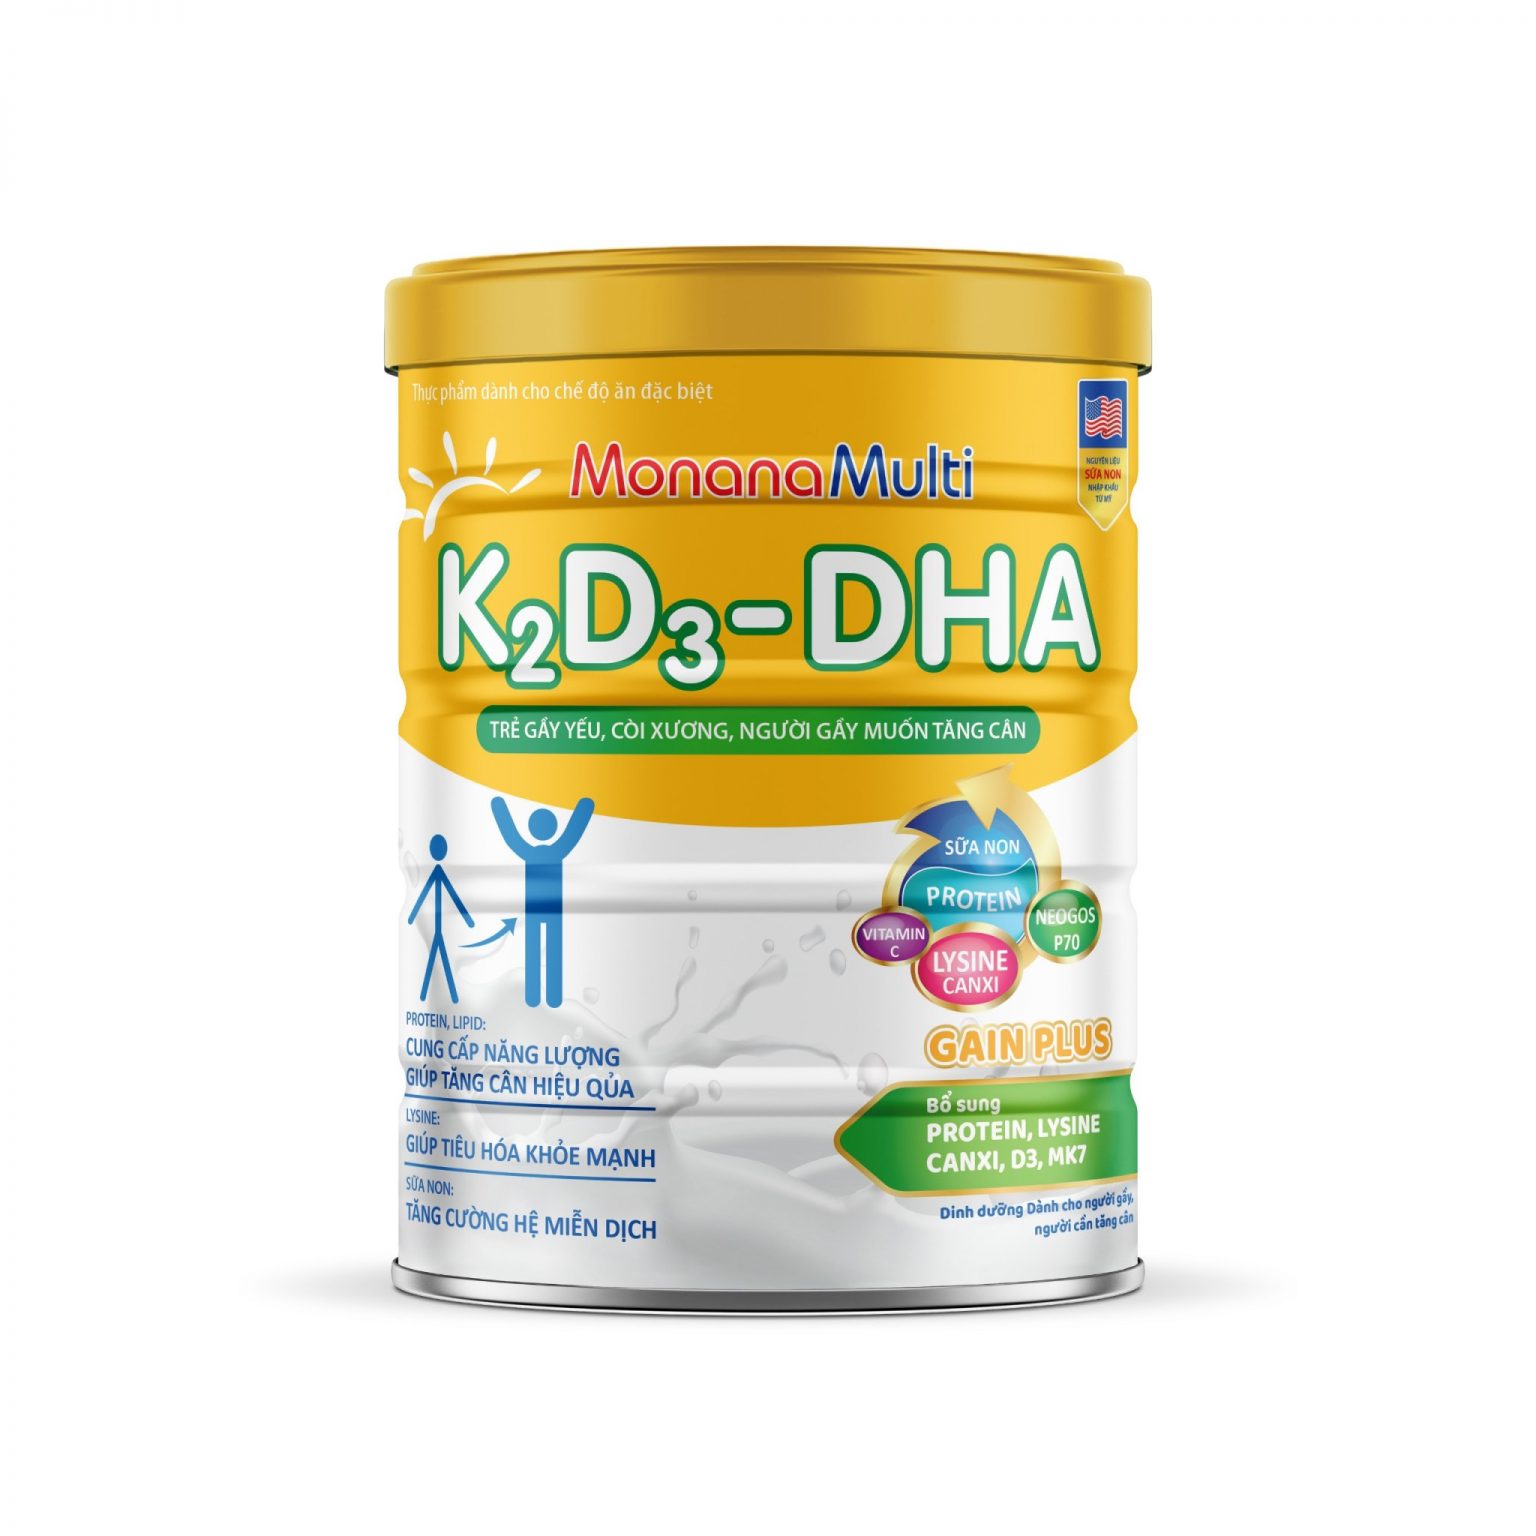 MonanaMulti K2D3-DHA Gain Plus - Dành Cho Trẻ Thấp Còi Từ 3 Tuổi Trở Lên